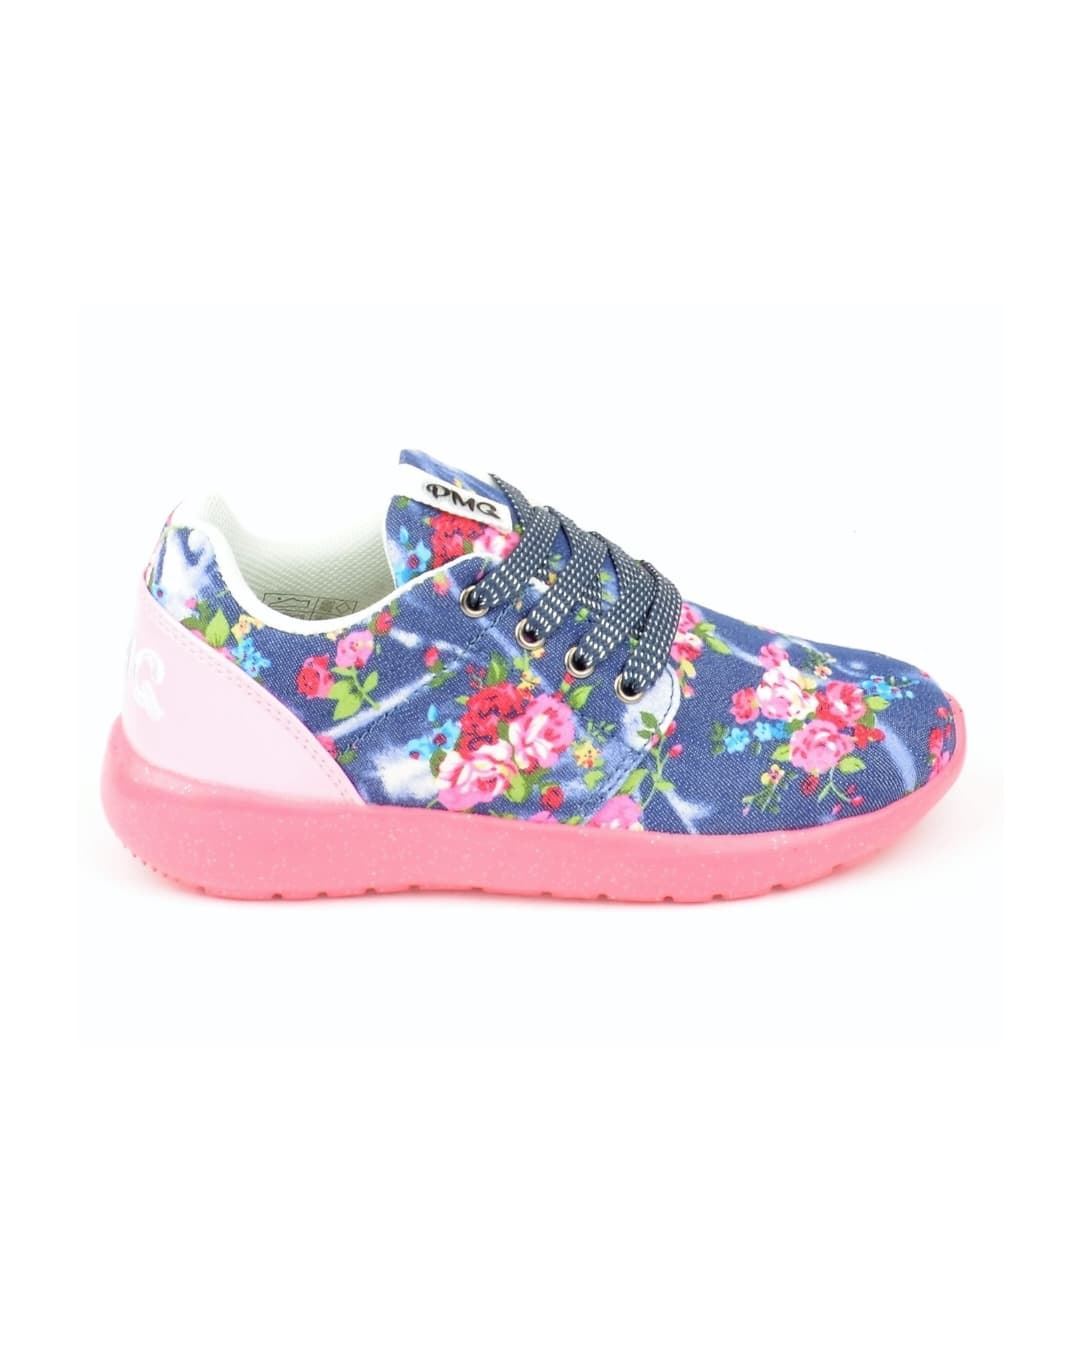 Primigi flower print canvas sneakers for girls - Image 3